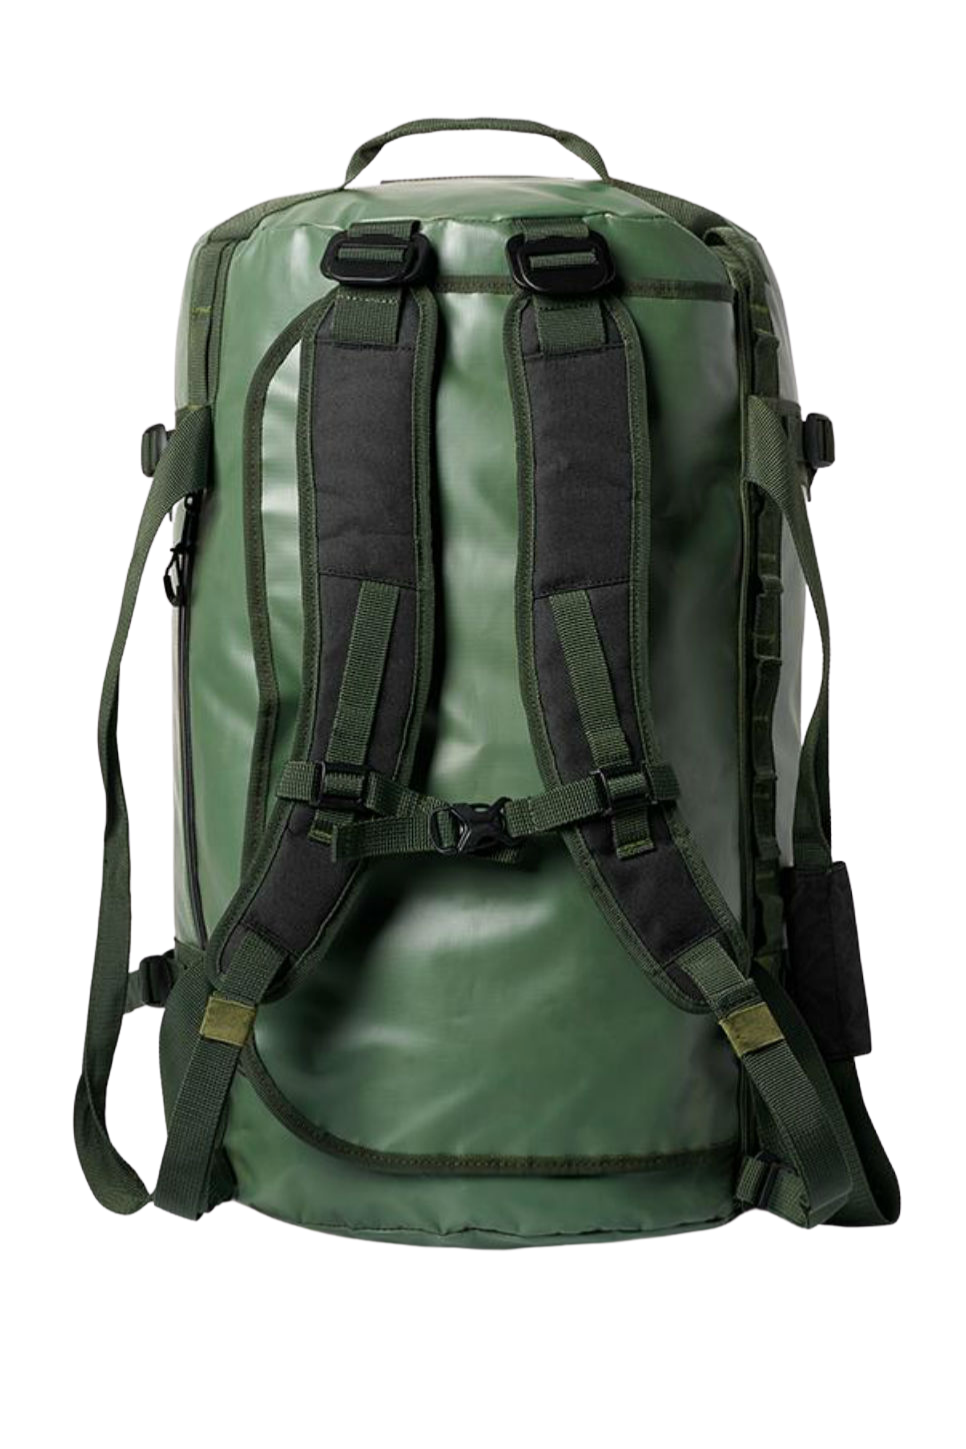 Roark - Keg 80L Duffel - Military - Backpack